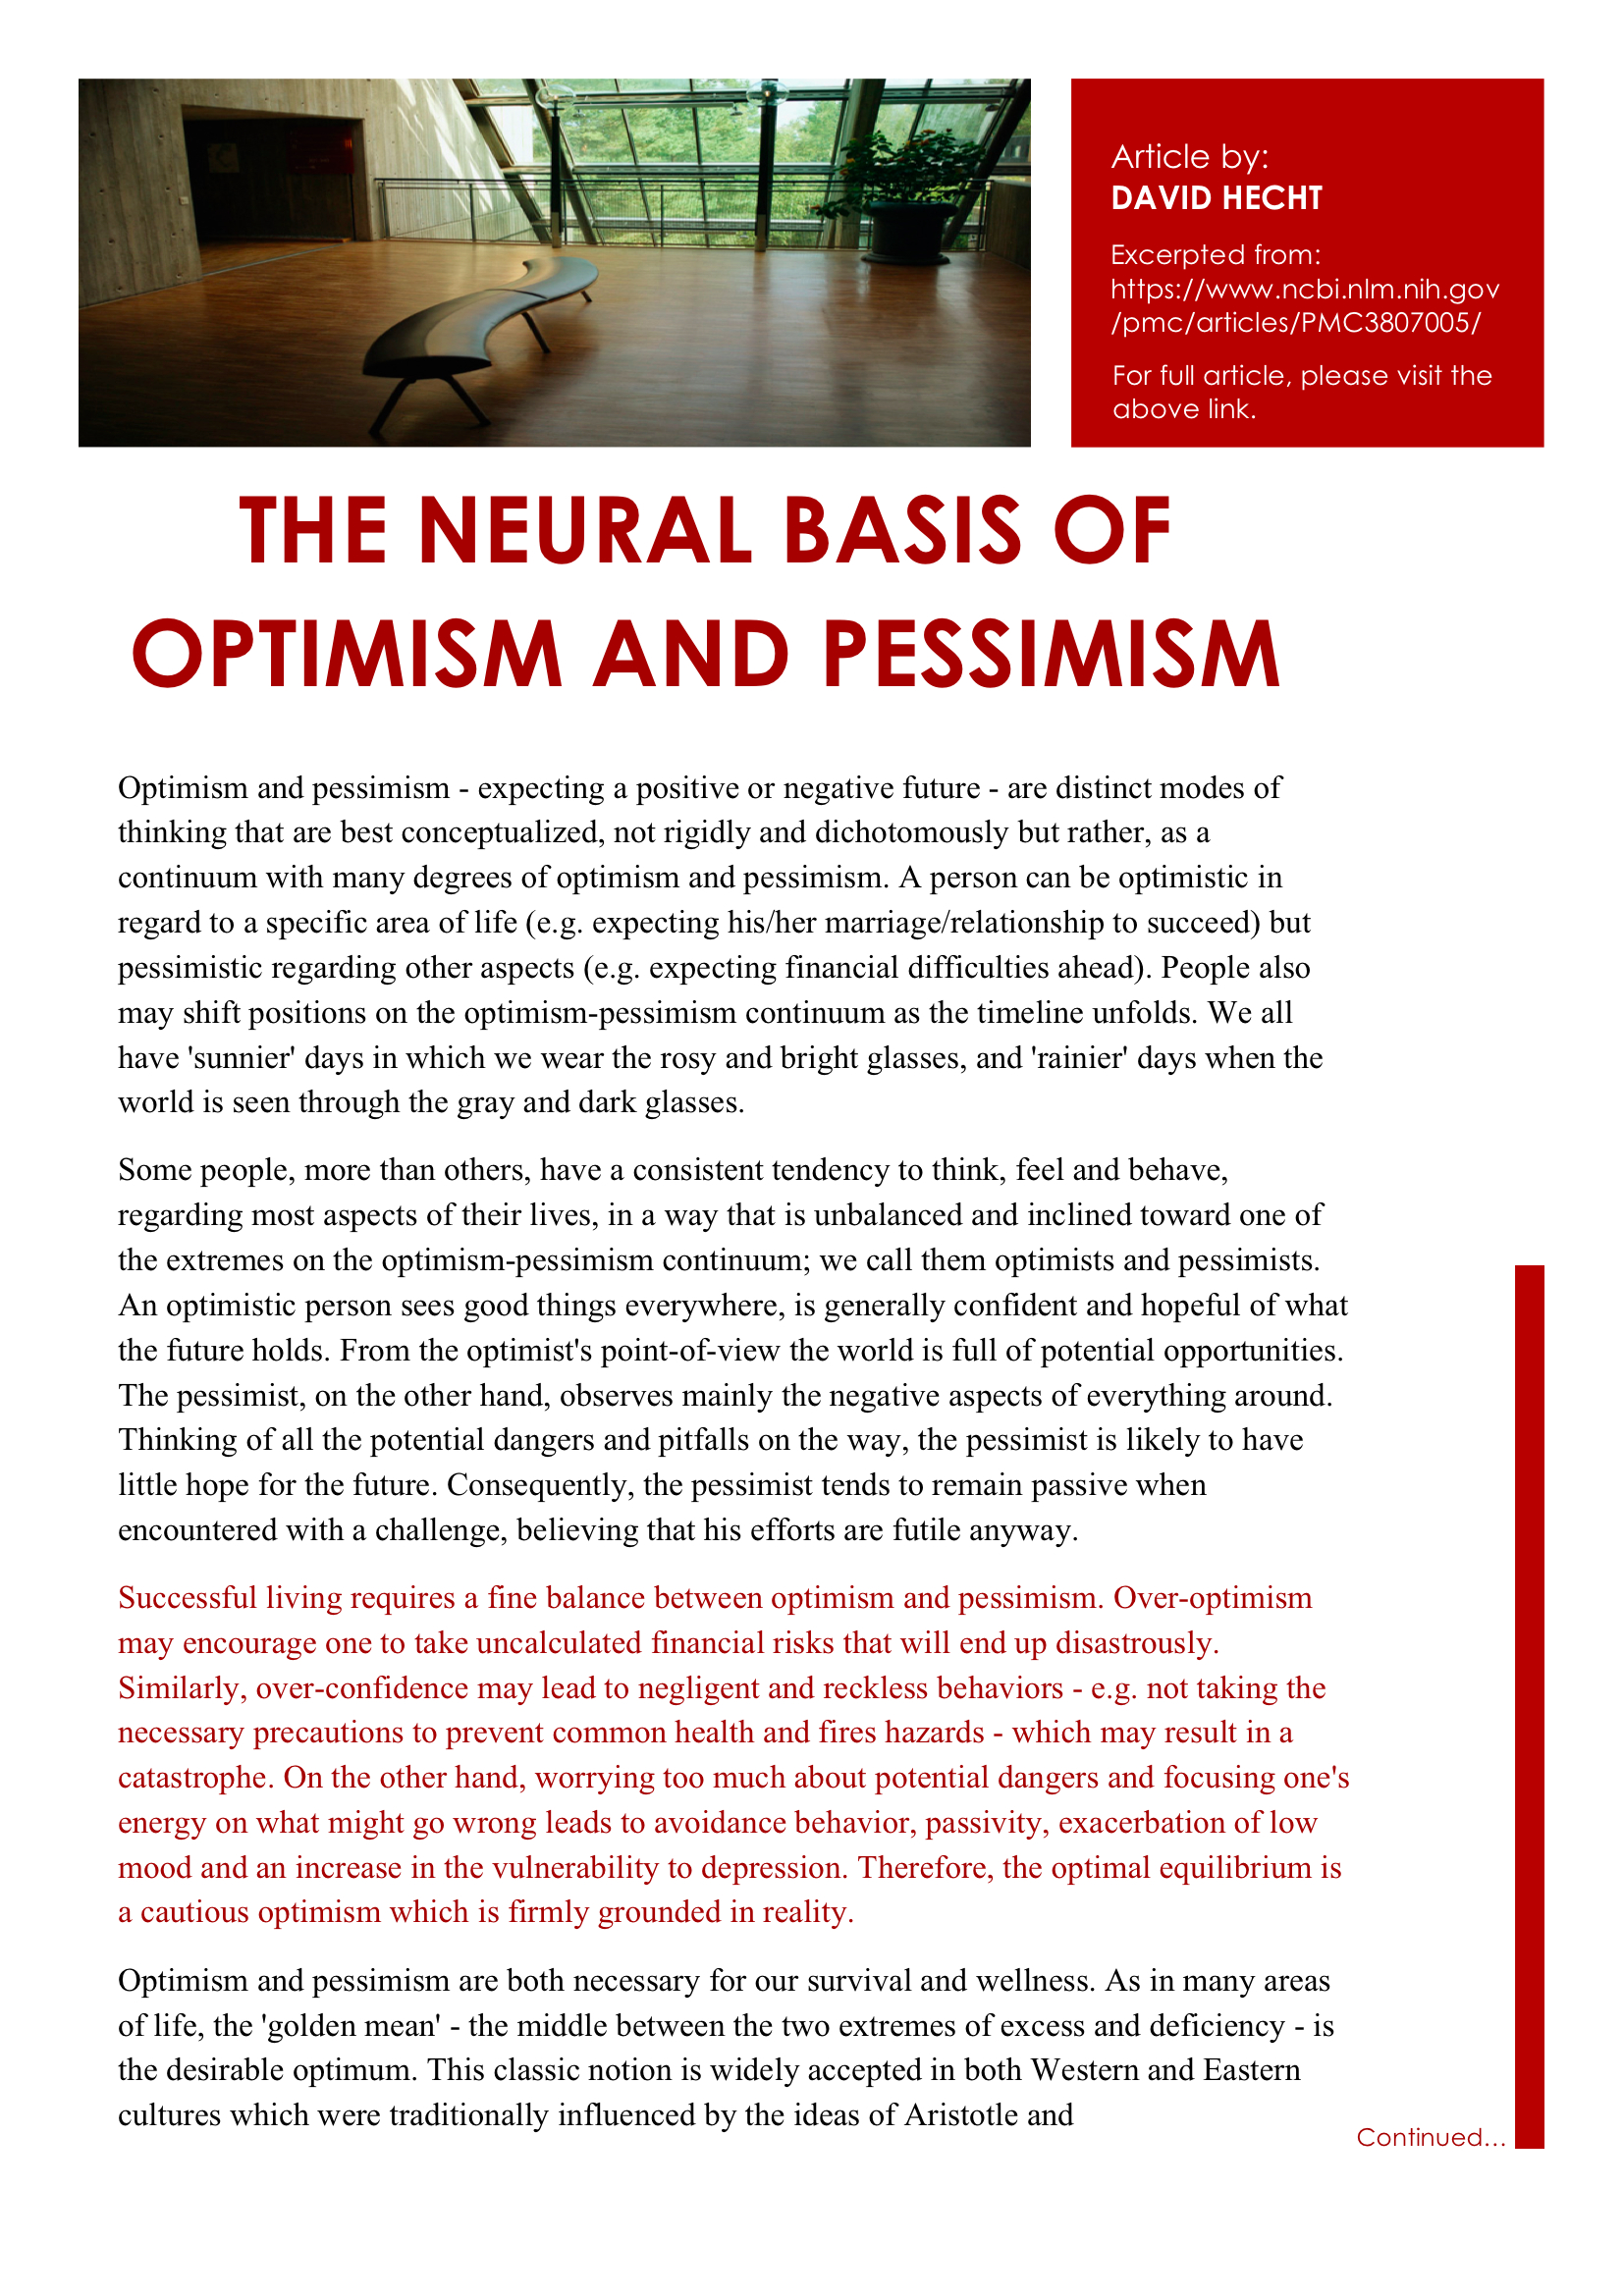 The Neural Basis of Optimism and Pessimism